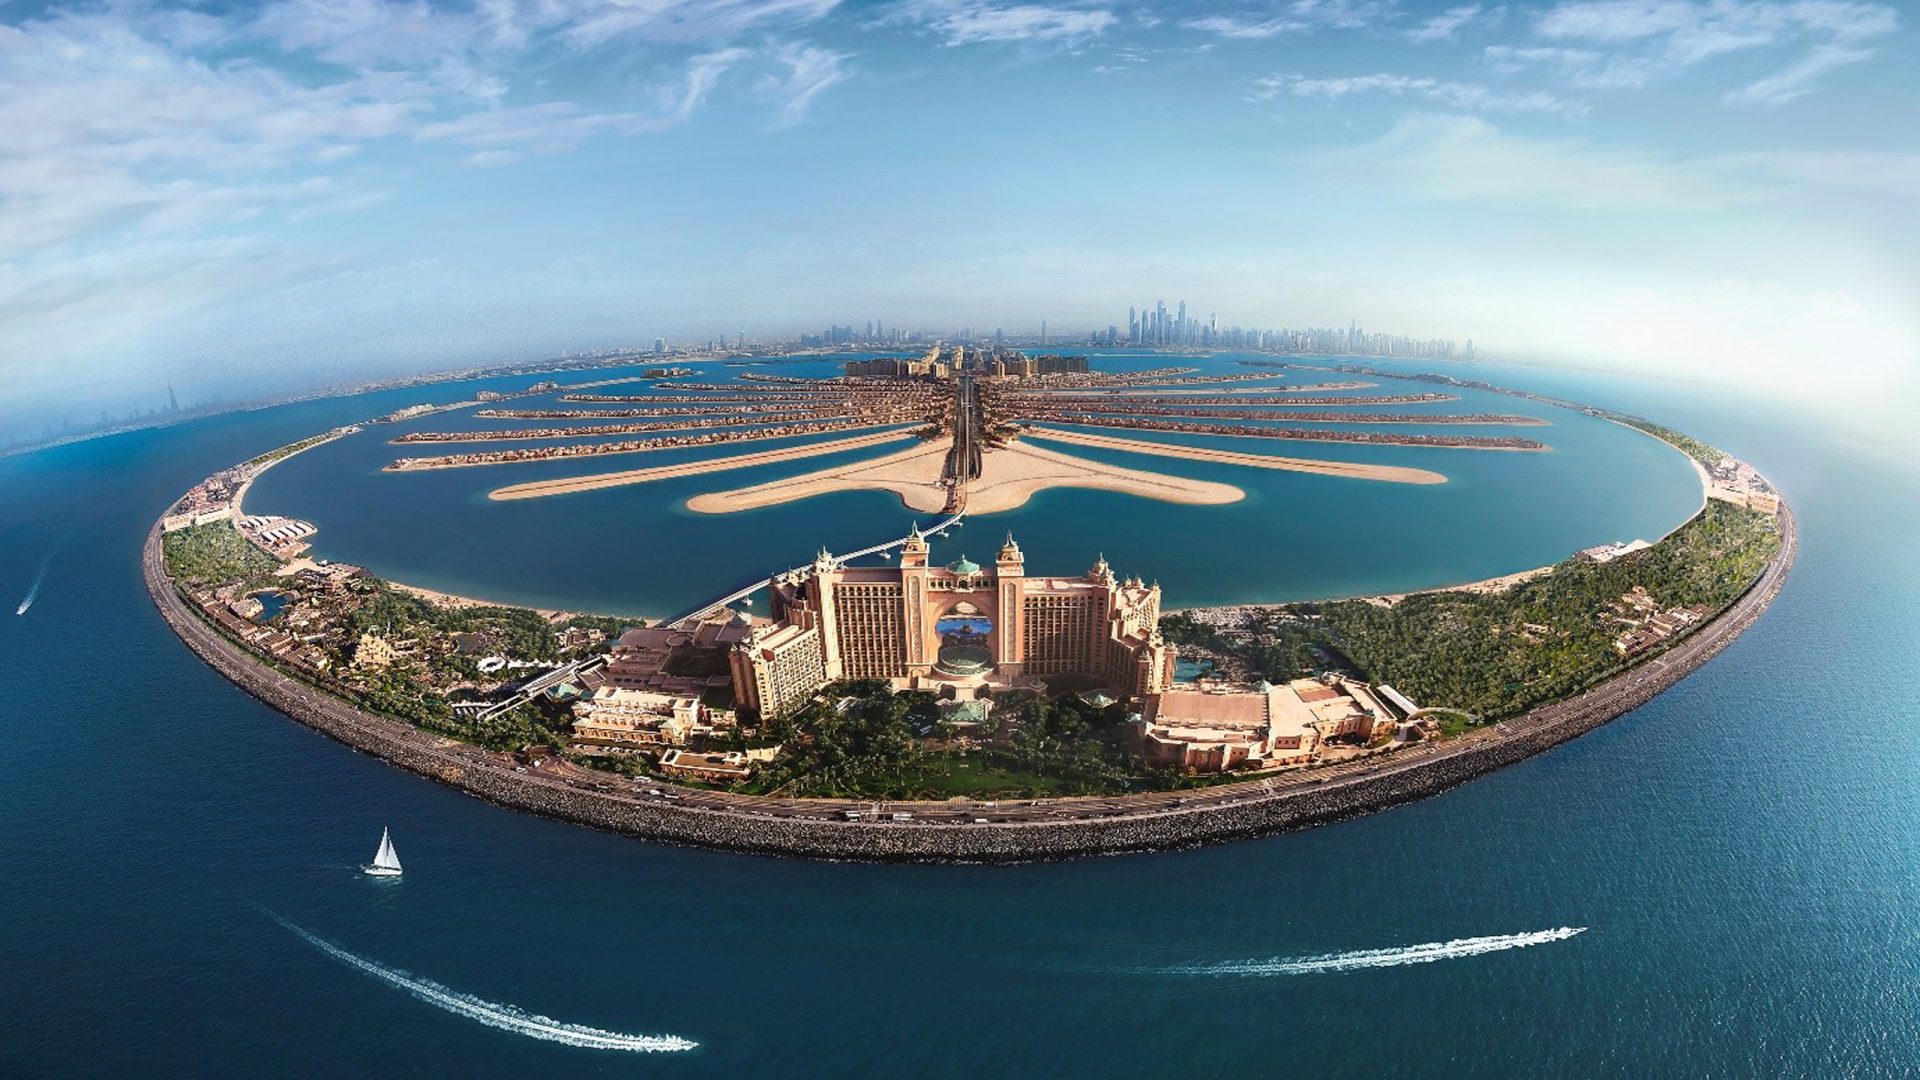 Dubai Hotel Atlantis Palm Jumeirah Island Overlooking The Arabian Gulf HD Wallpaper 2560x1600, Wallpaper13.com